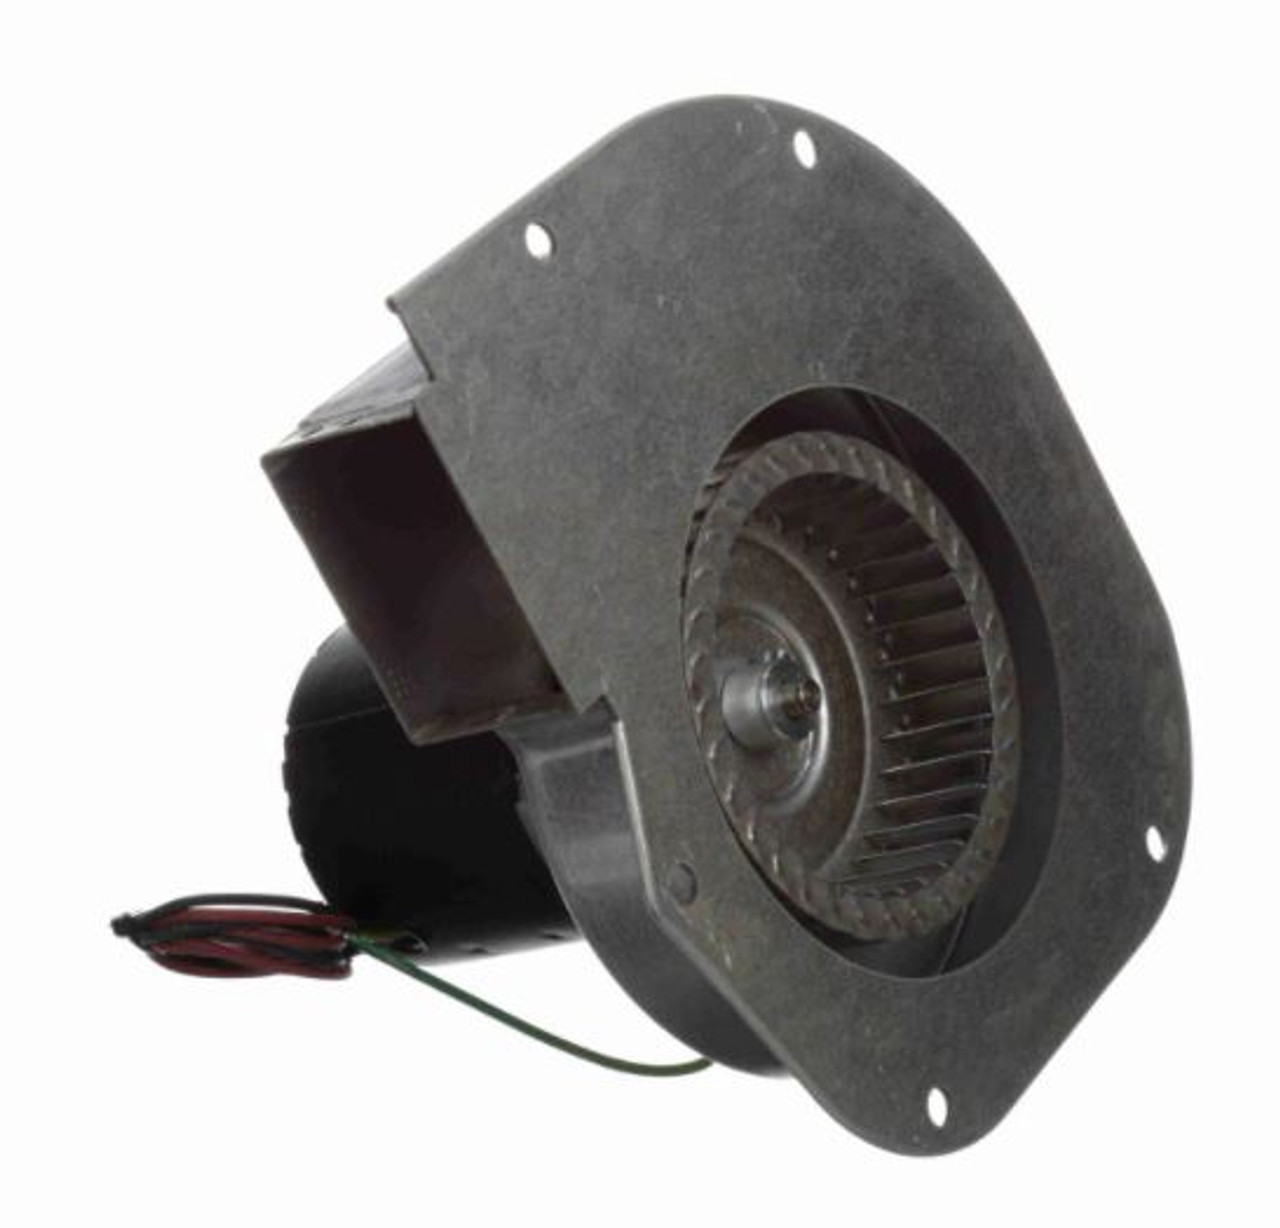 A150 Fasco, Trane Furnace Draft Inducer Blower (X38080029010) 208-230 Volts